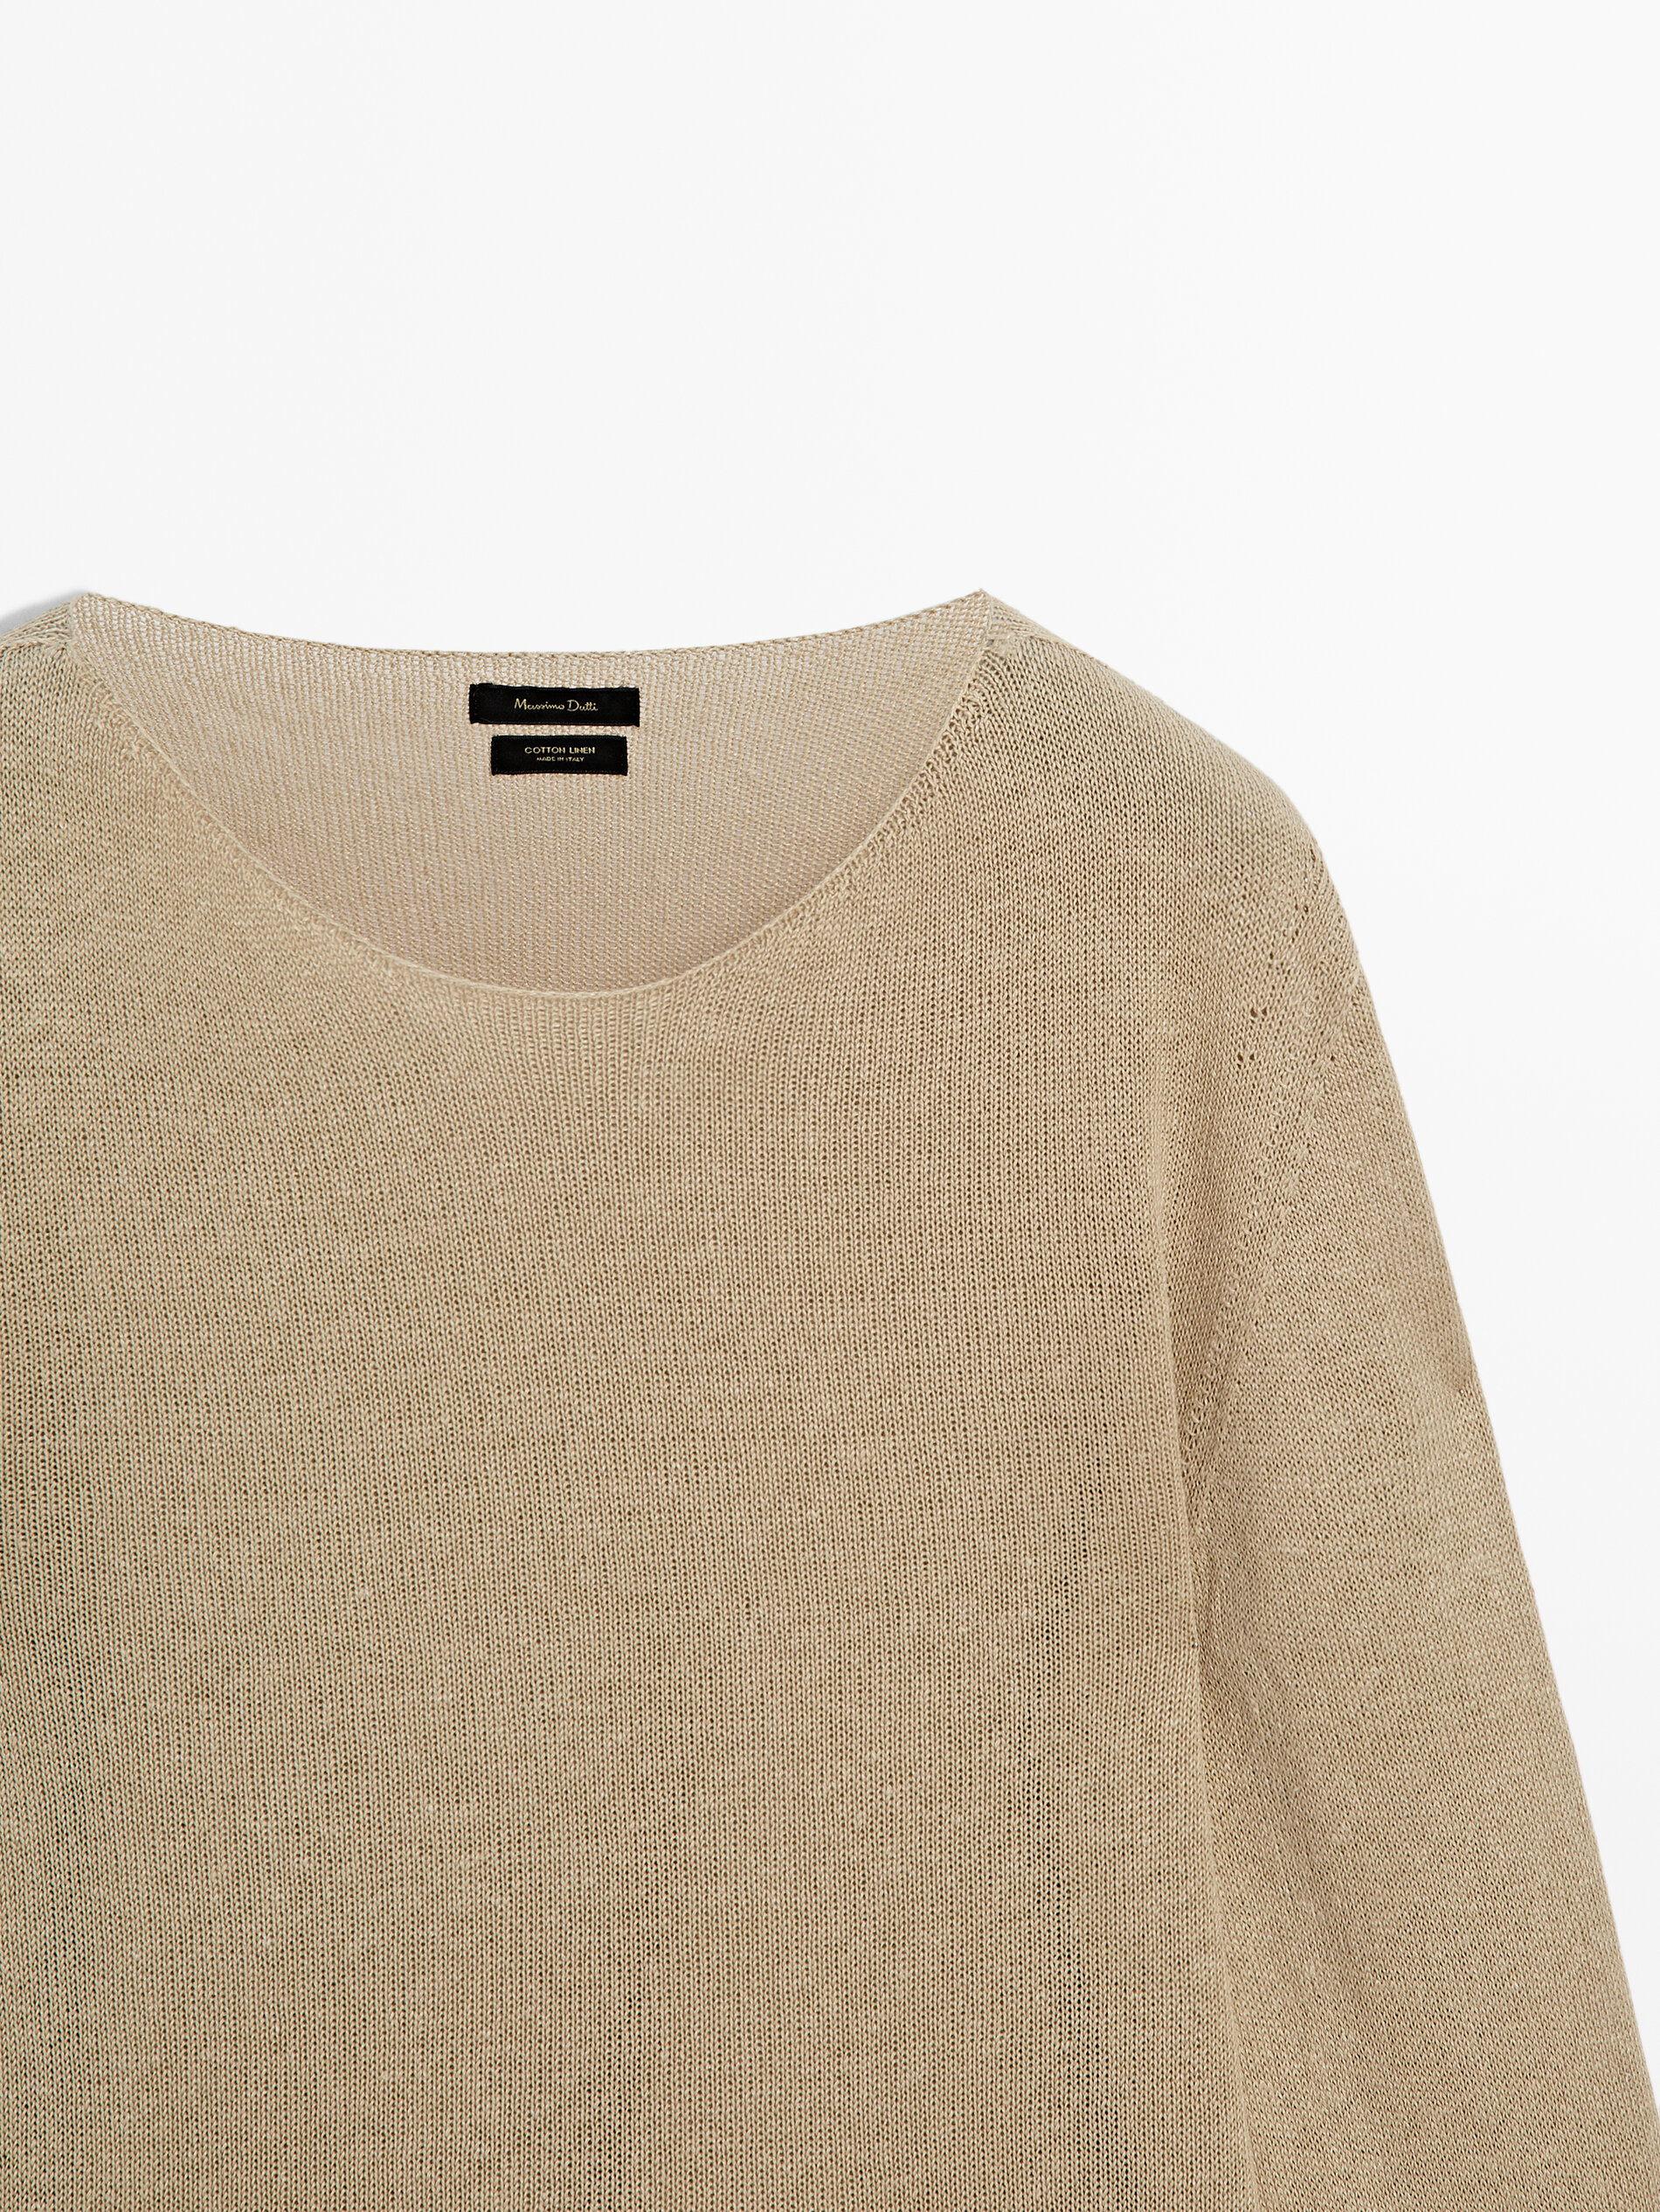 Linen blend boat neck knit sweater